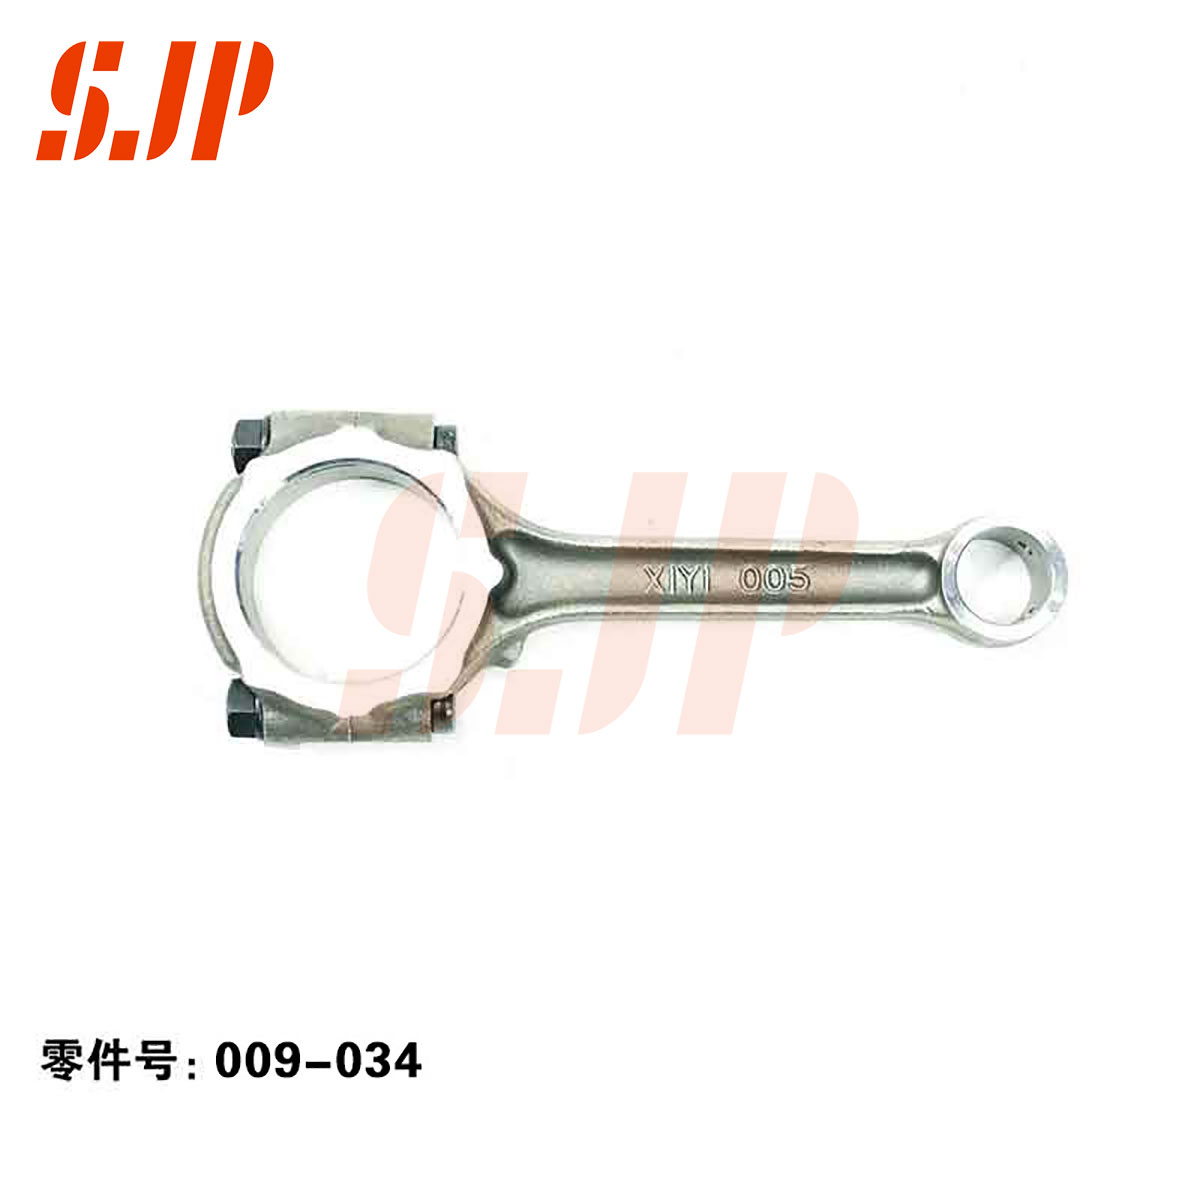 SJ-009-034 Connecting Rod For Suzuki Tenyu M16